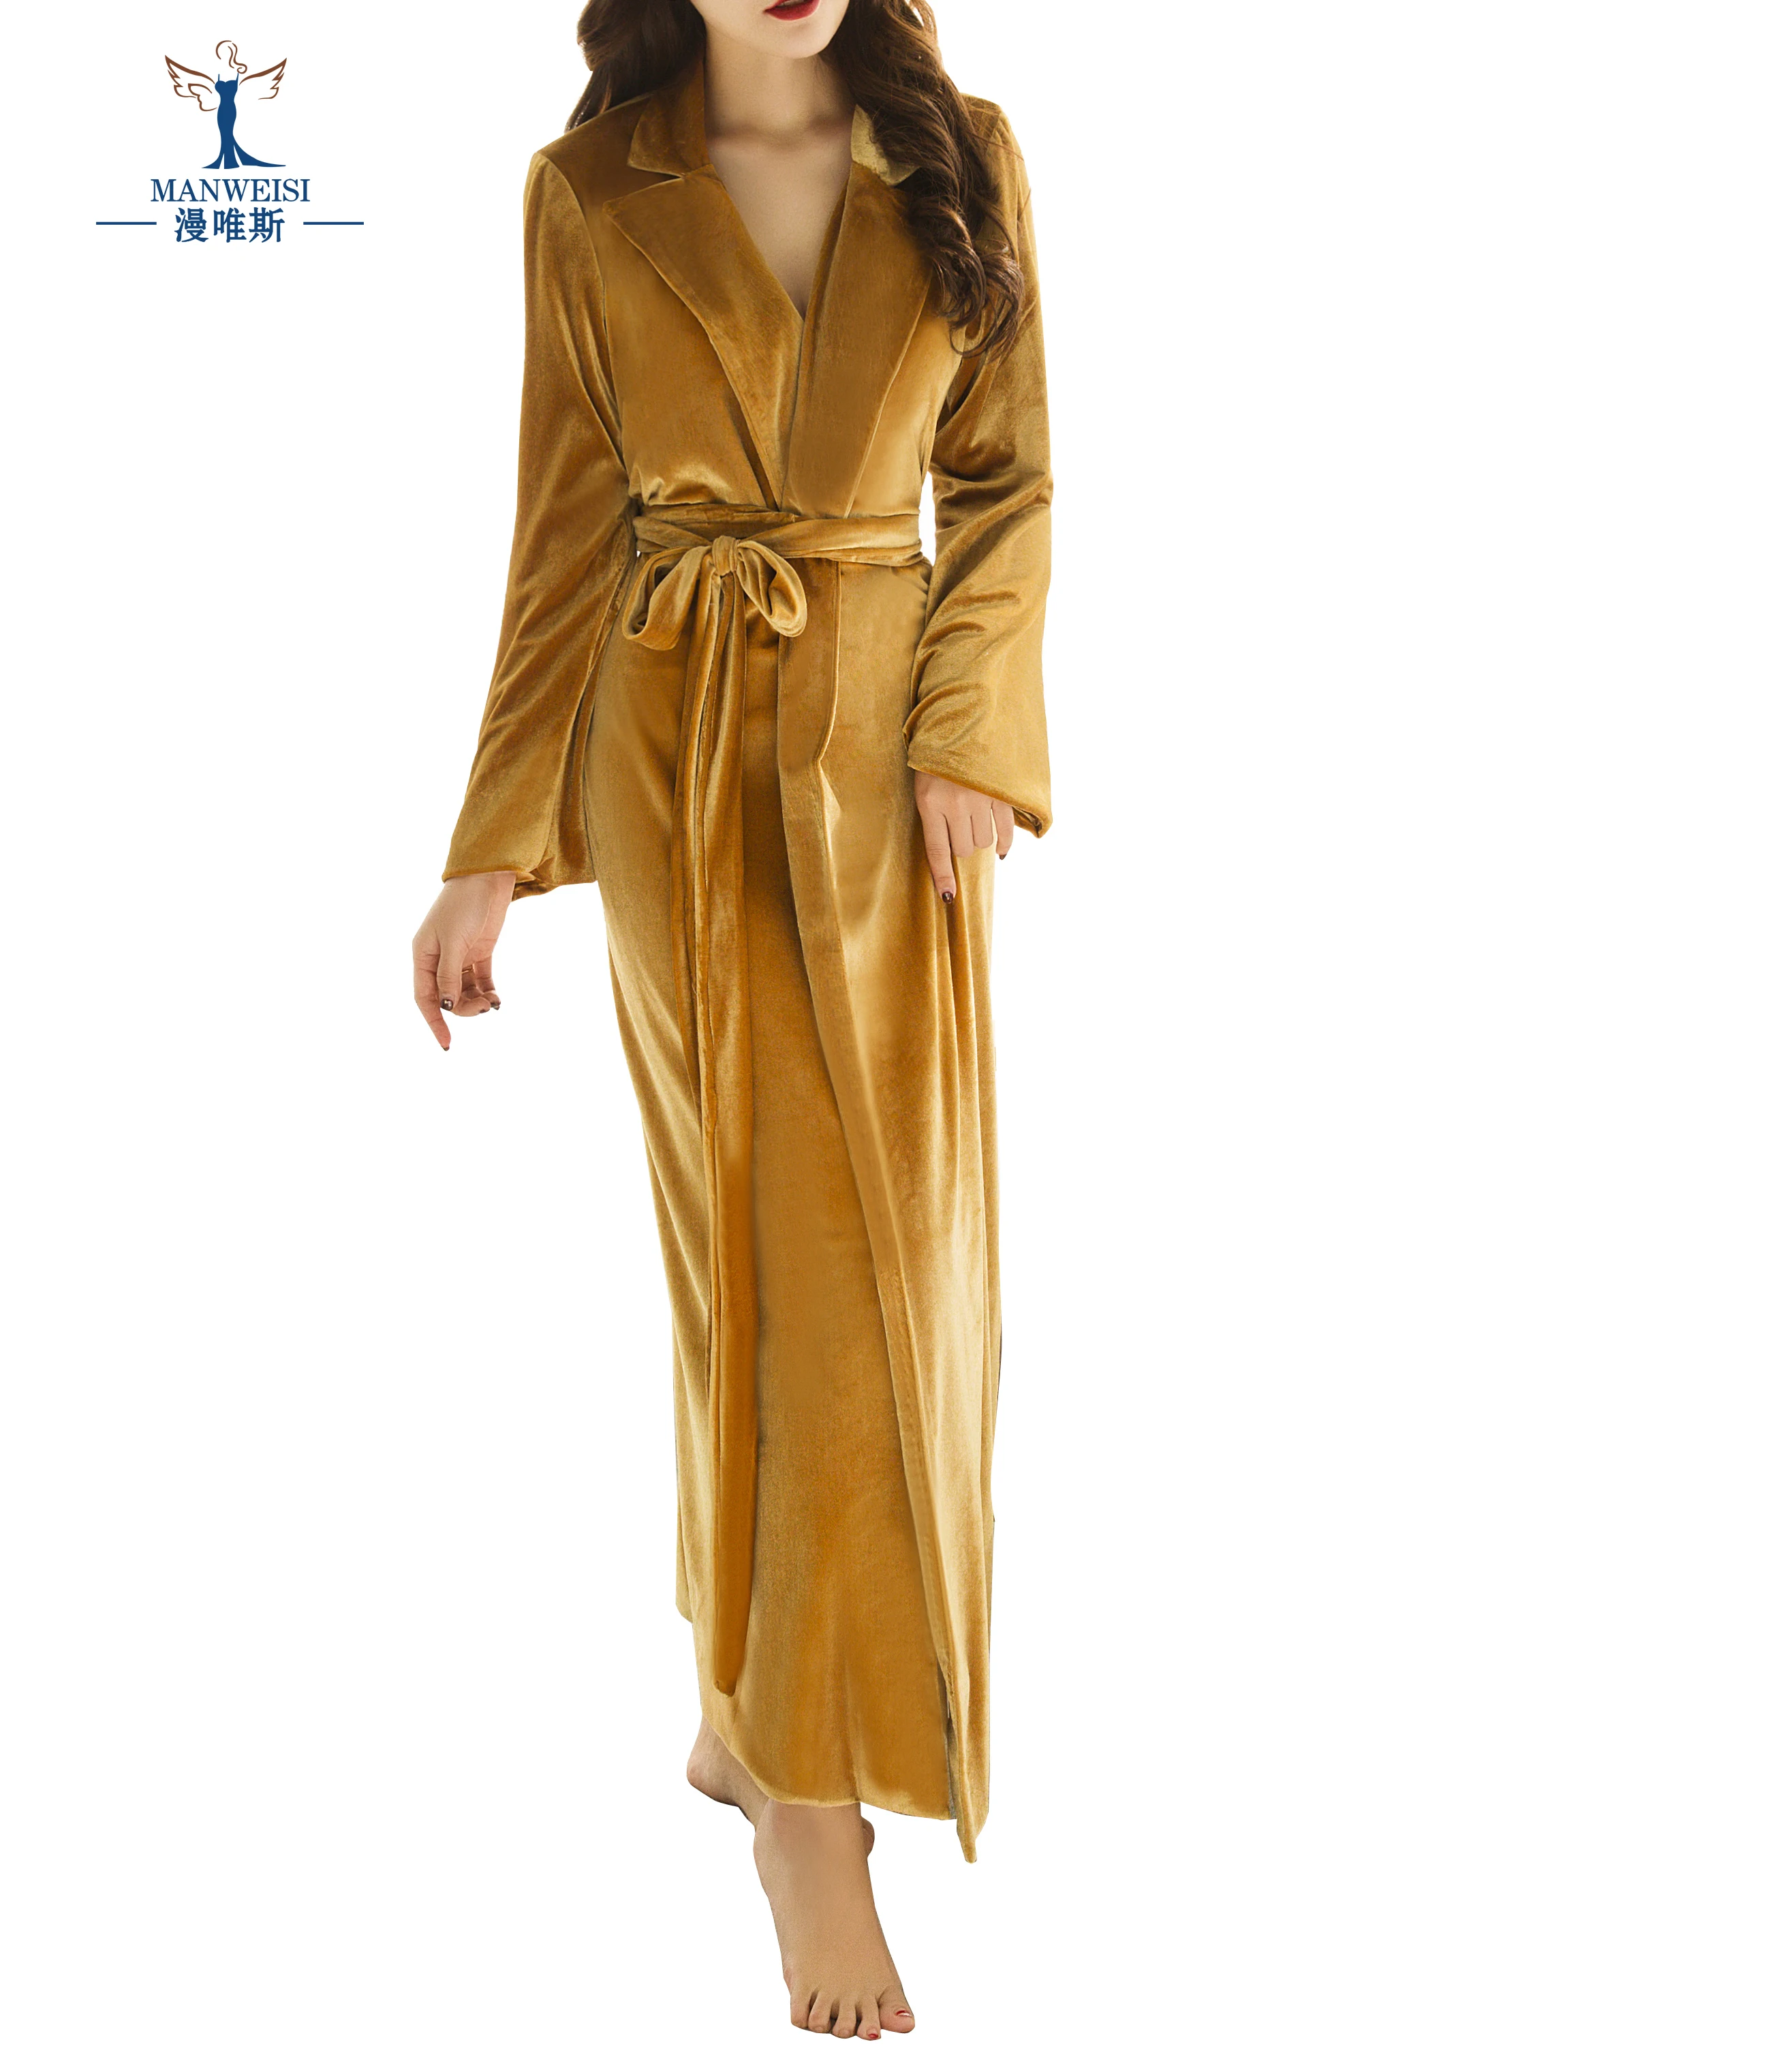 Golden Velvet Shawl Bathrobe Lady Wraps Sleepwear Women Soft Sheer Nightgown Custom Made Long Photo Dress Bridesmaid Cape